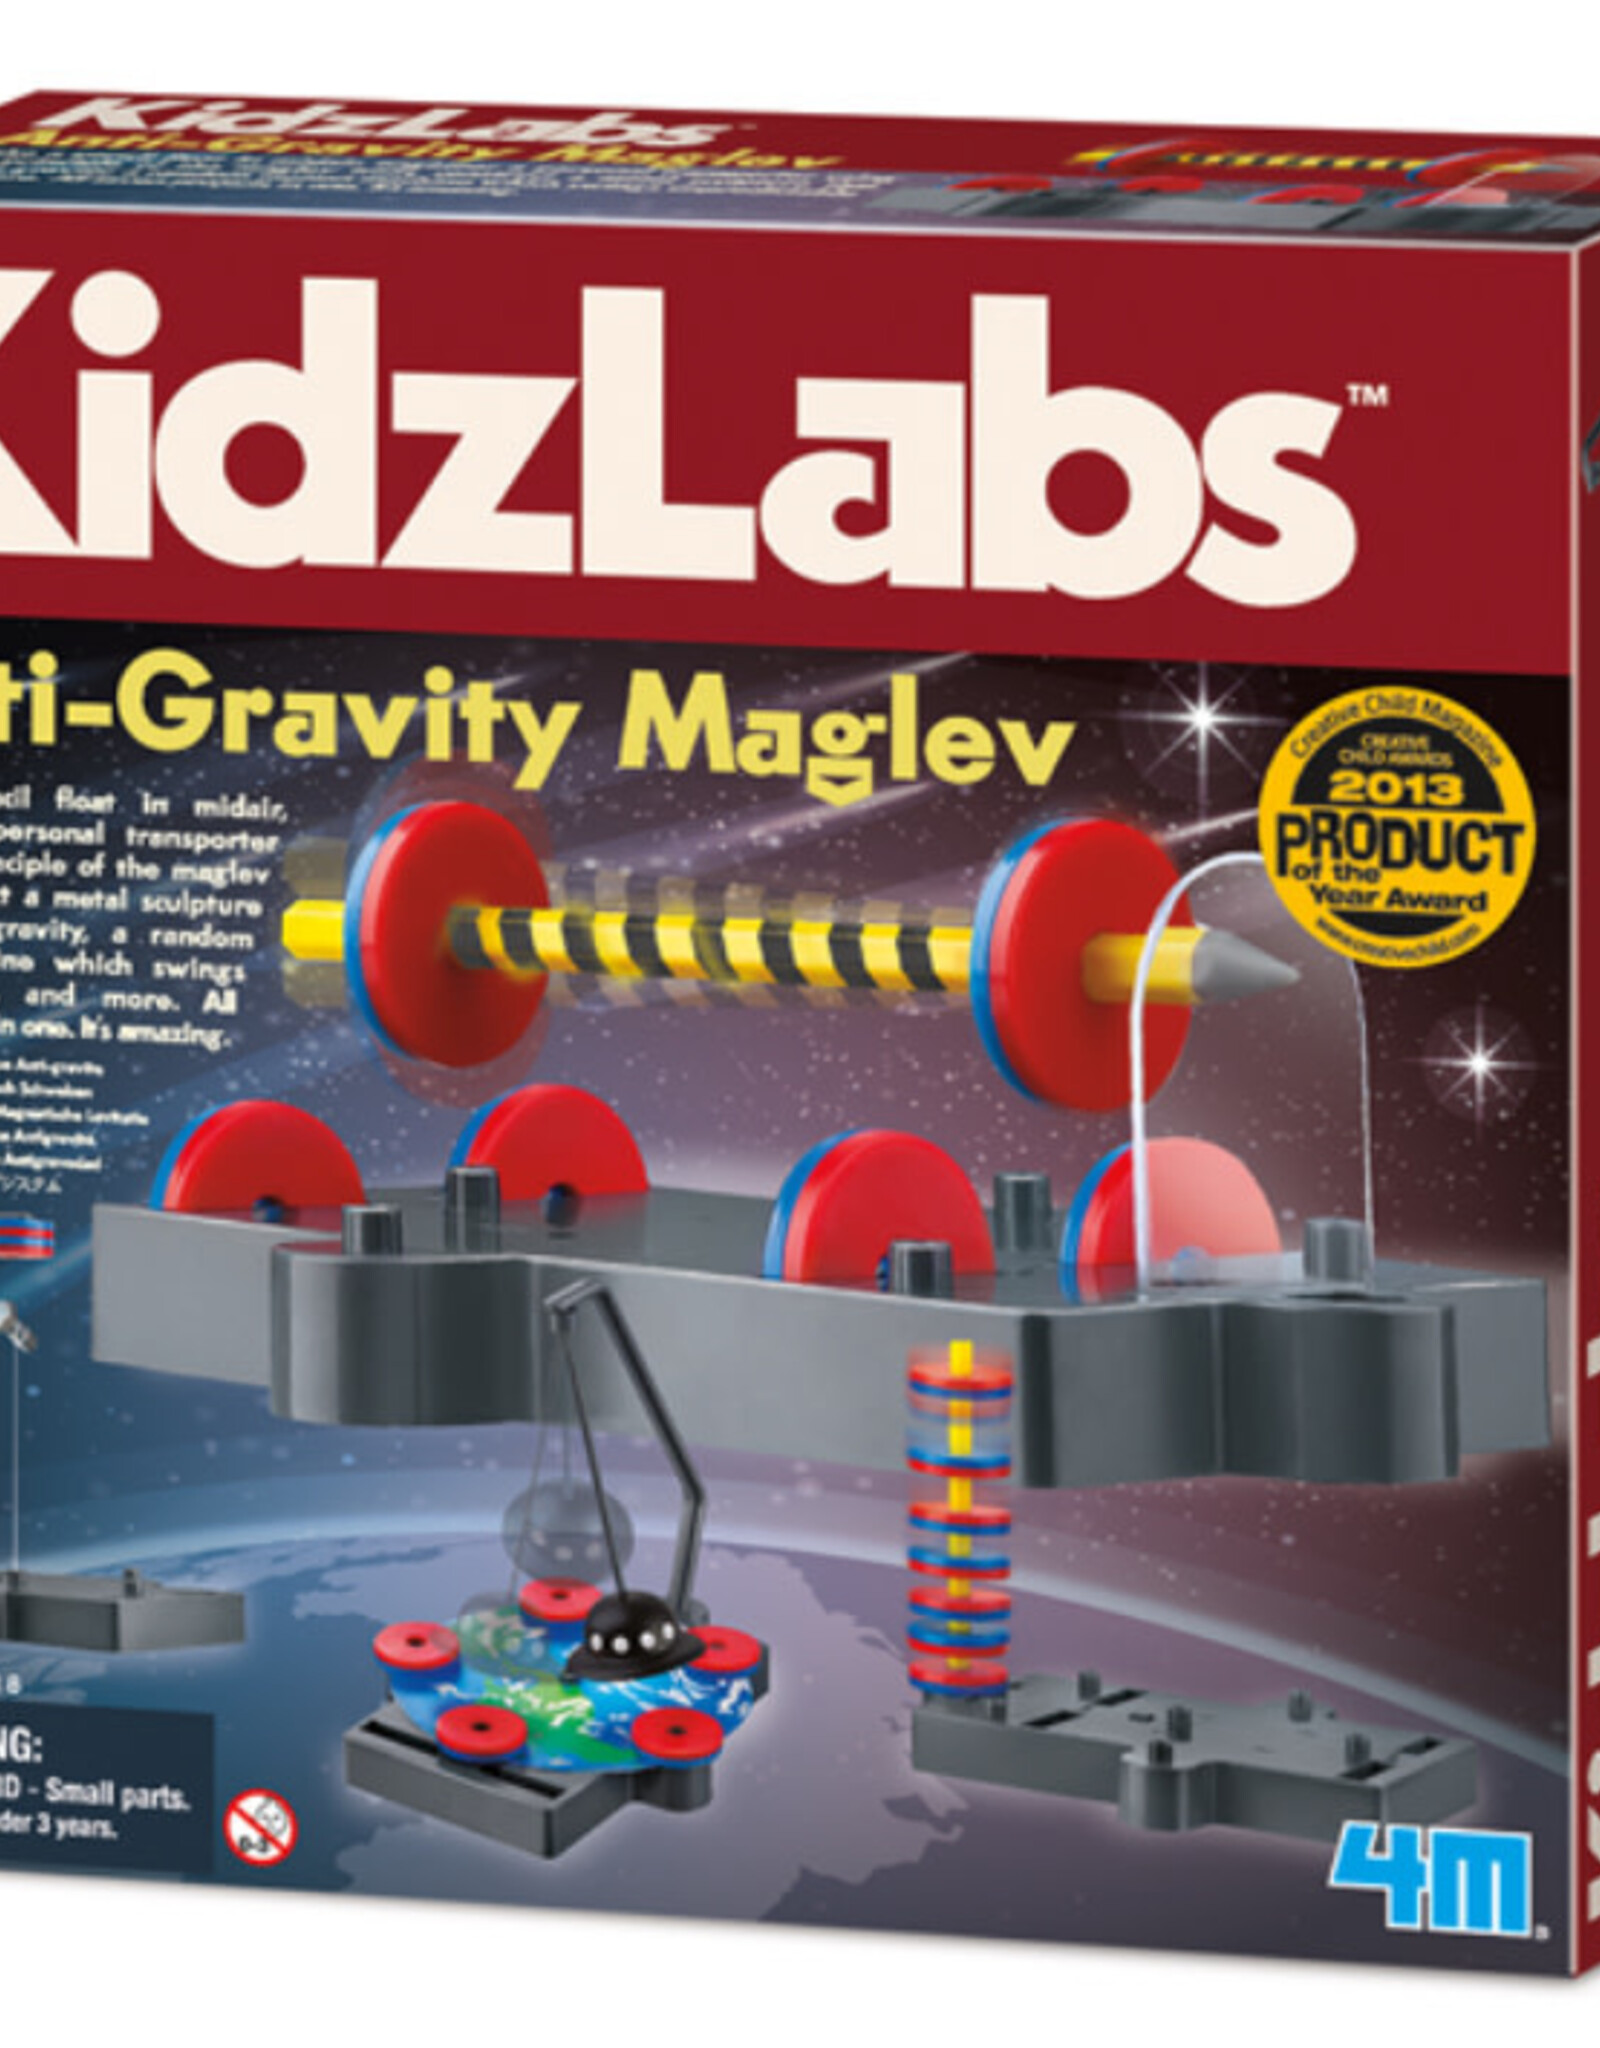 Playwell Kidz Labs Anti-Gravity Maglev